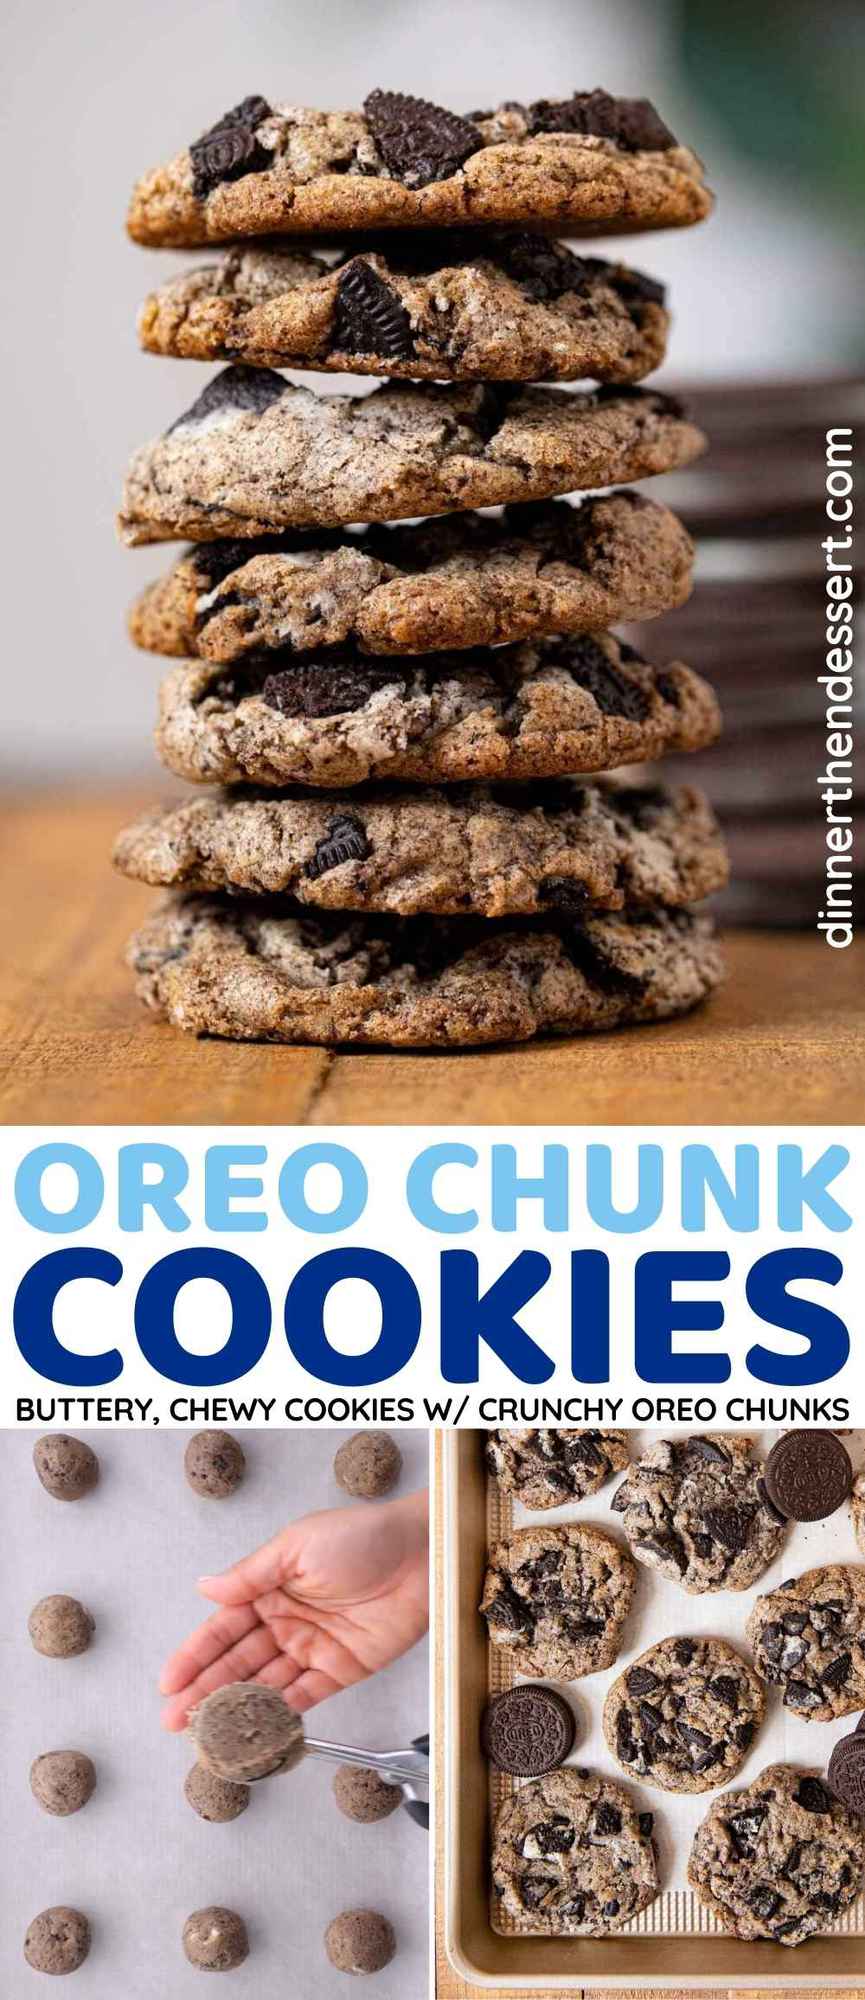 Oreo Chunk Cookies Collage